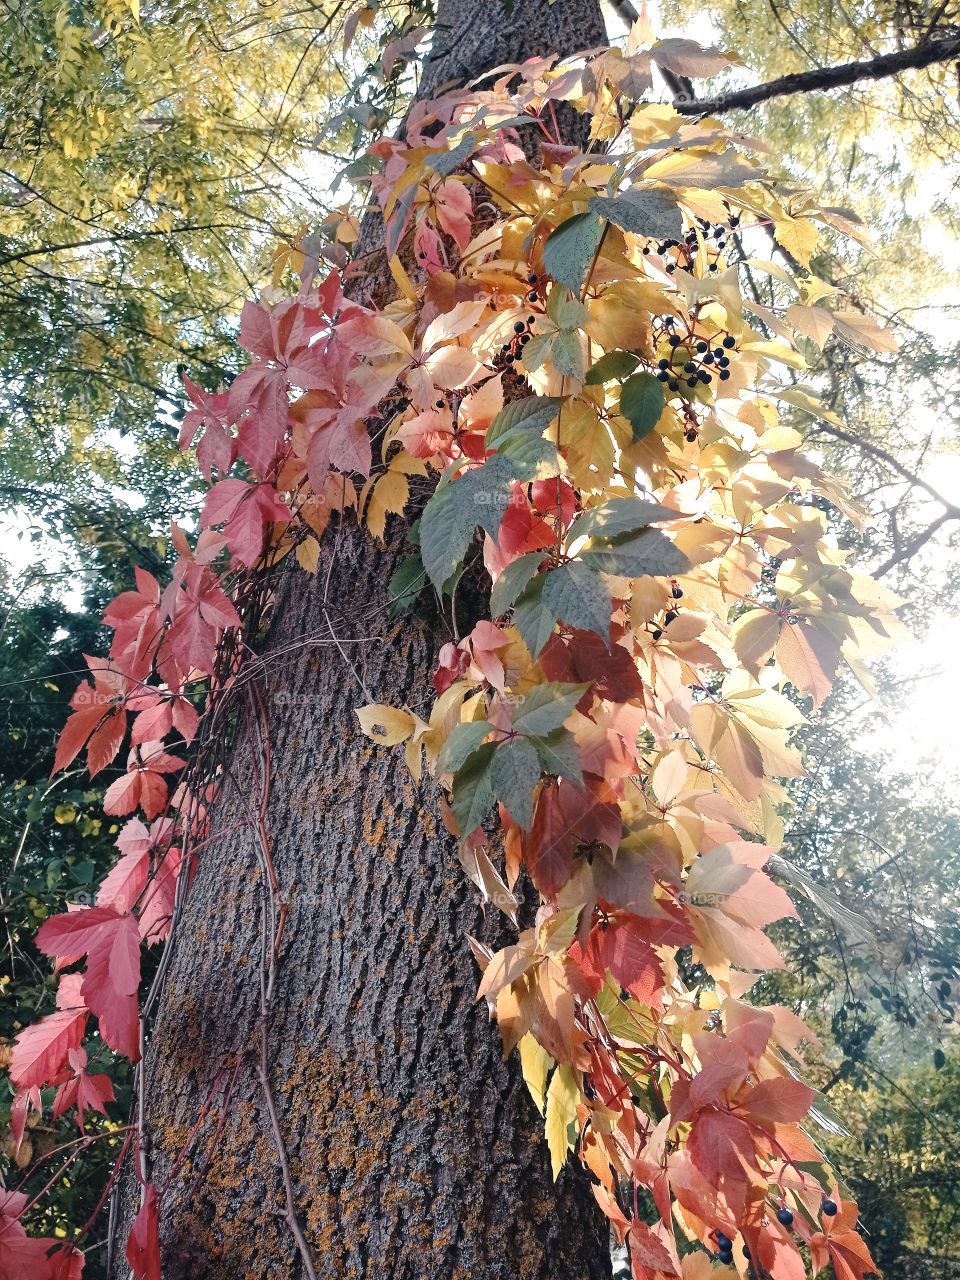 A tree guest enjoying the autumn magical sun